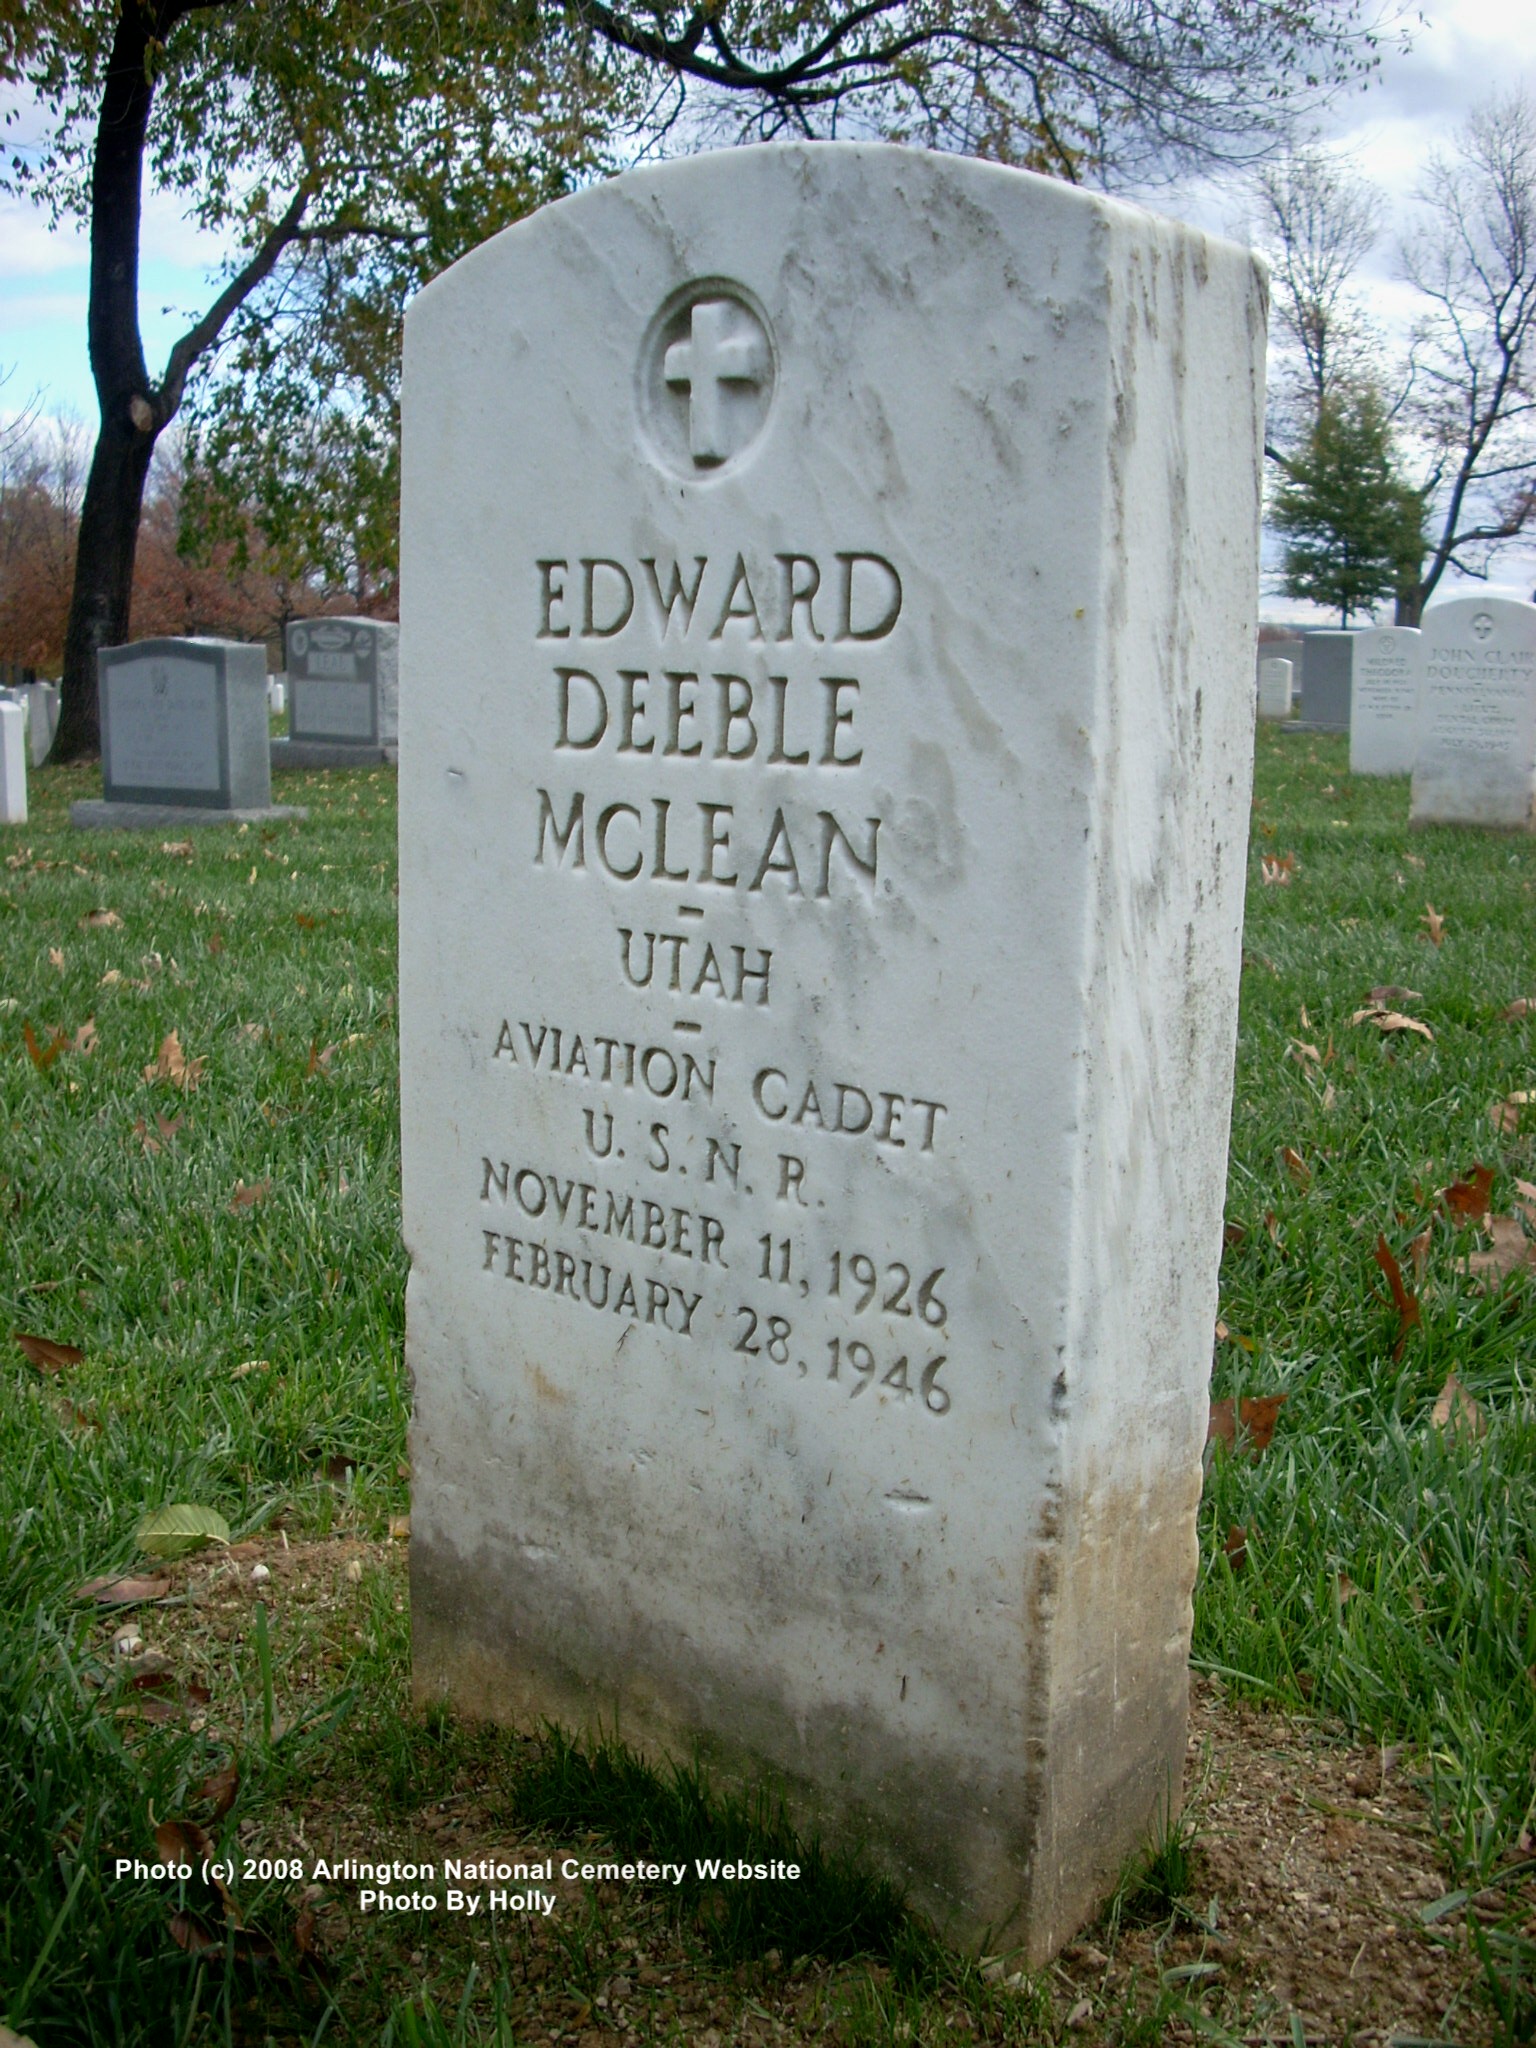 edmclean-gravesite-photo-november-2008-003